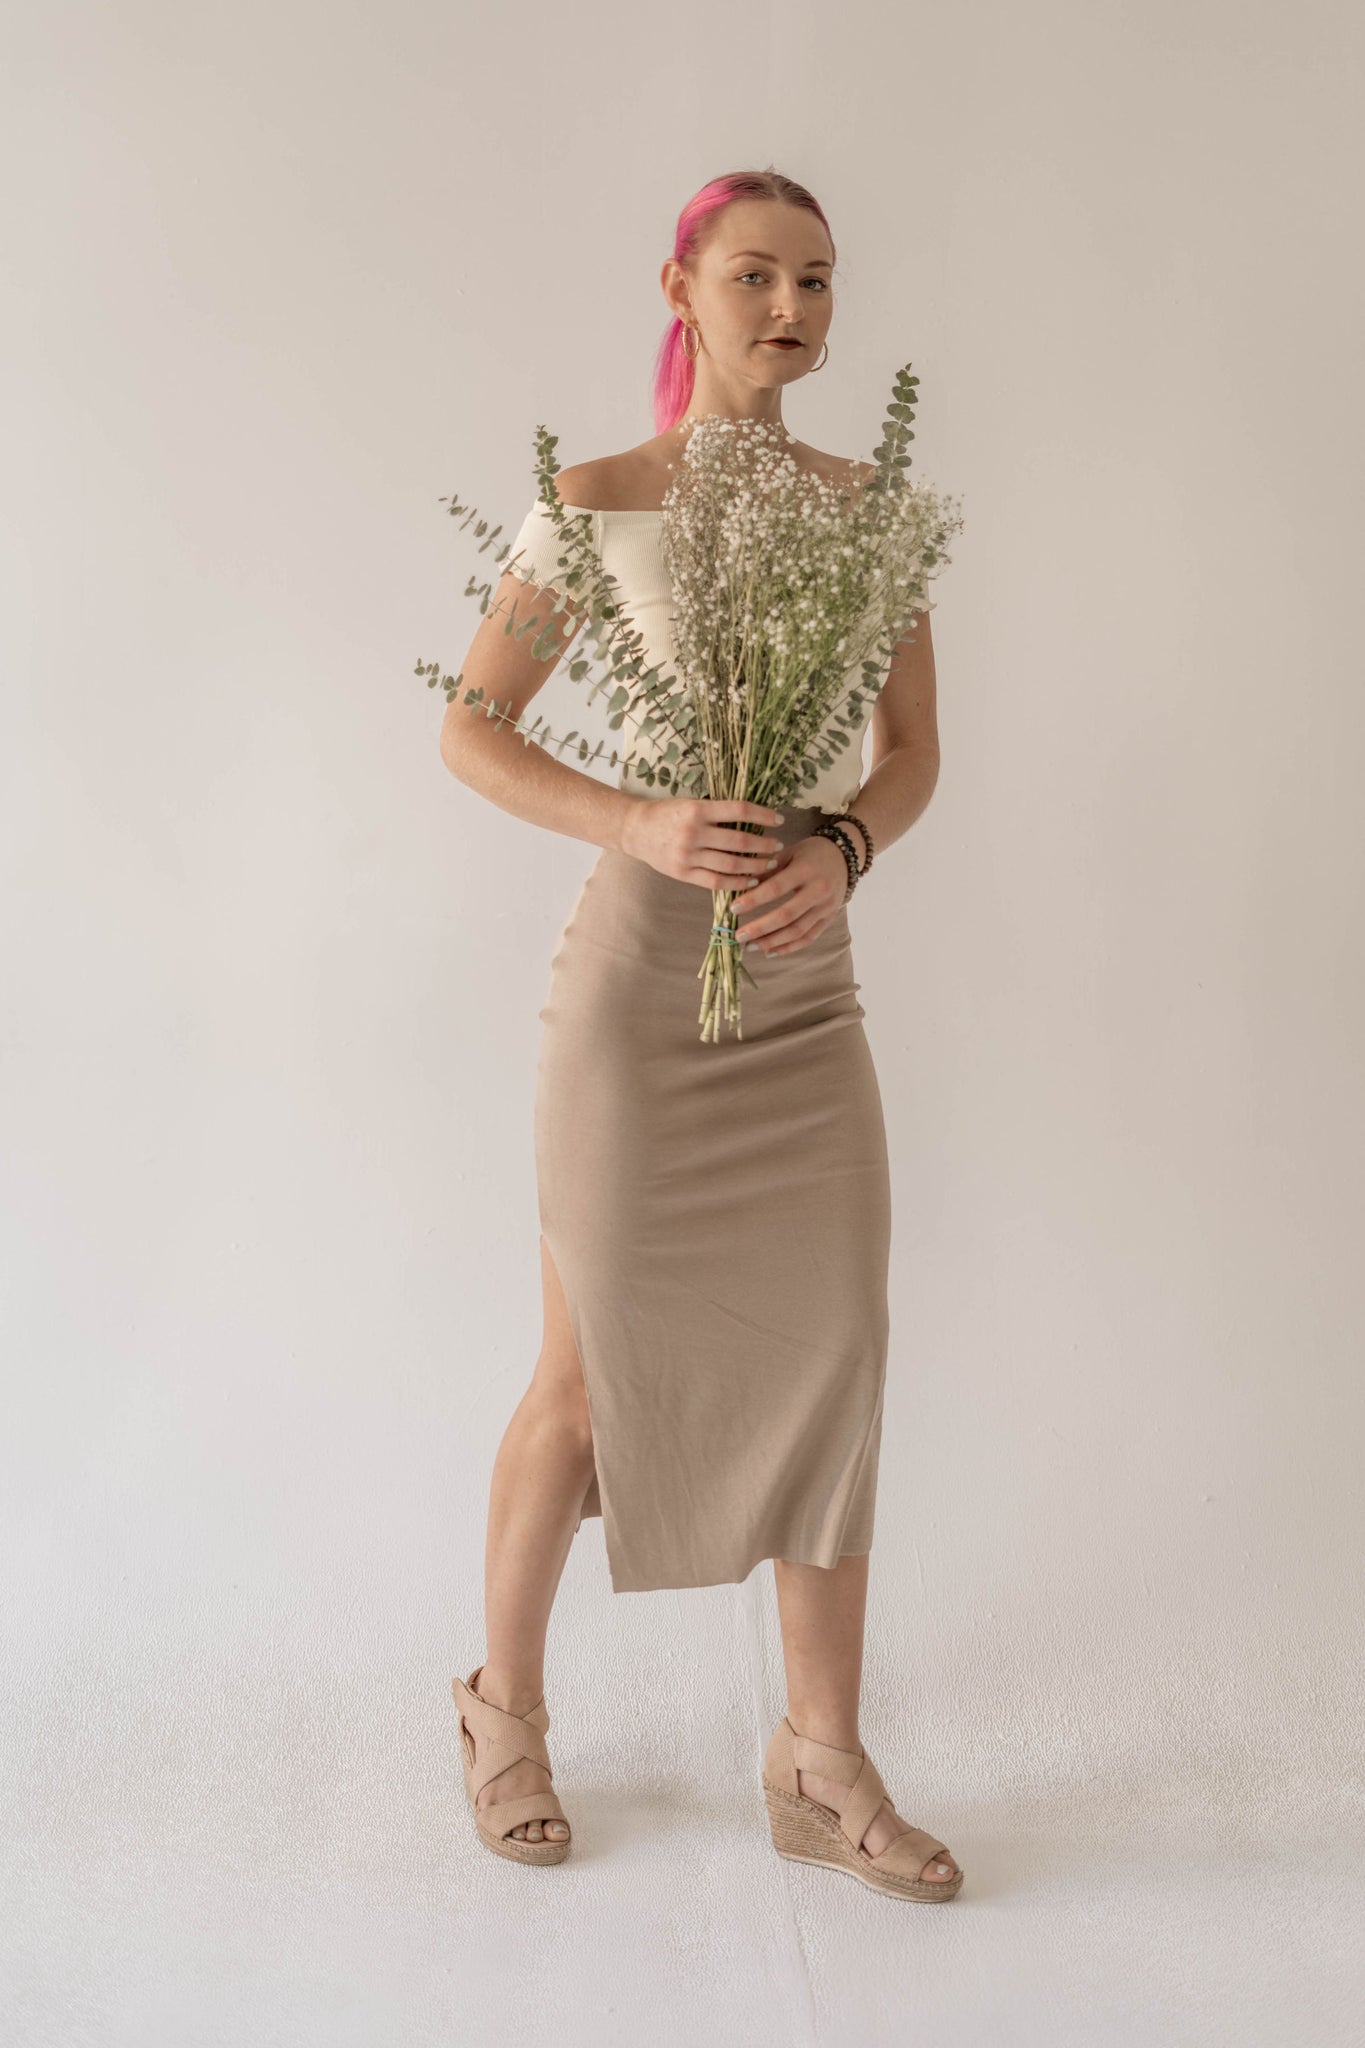 woman wearing skirt holding flowers